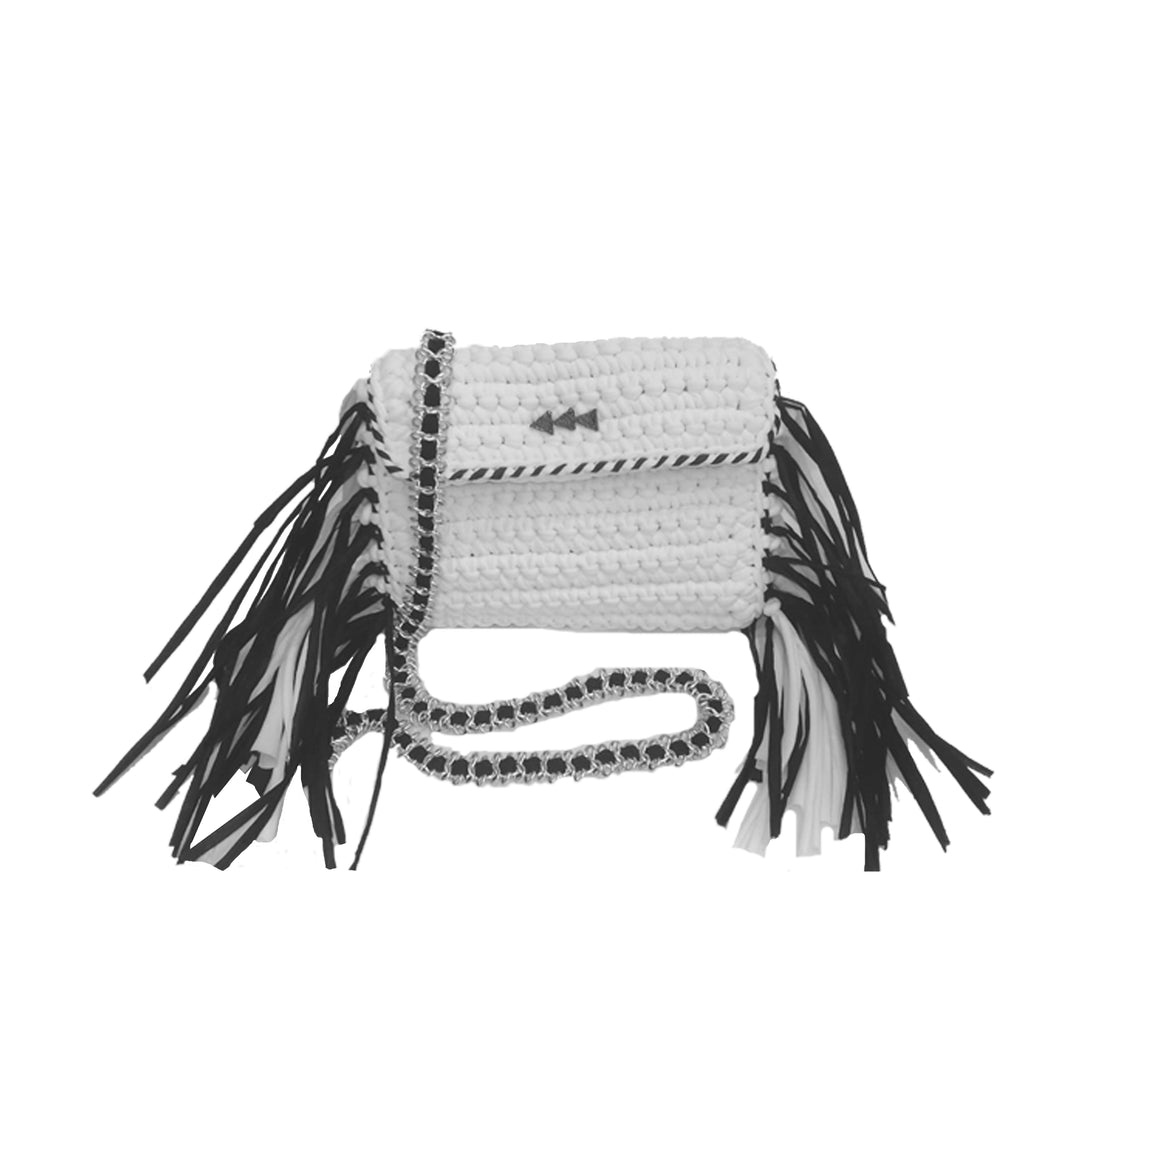 Taghari-Raffia-Bag-in-white-and-black-with-arrow-jewel-designed-by-alexandra-koumba